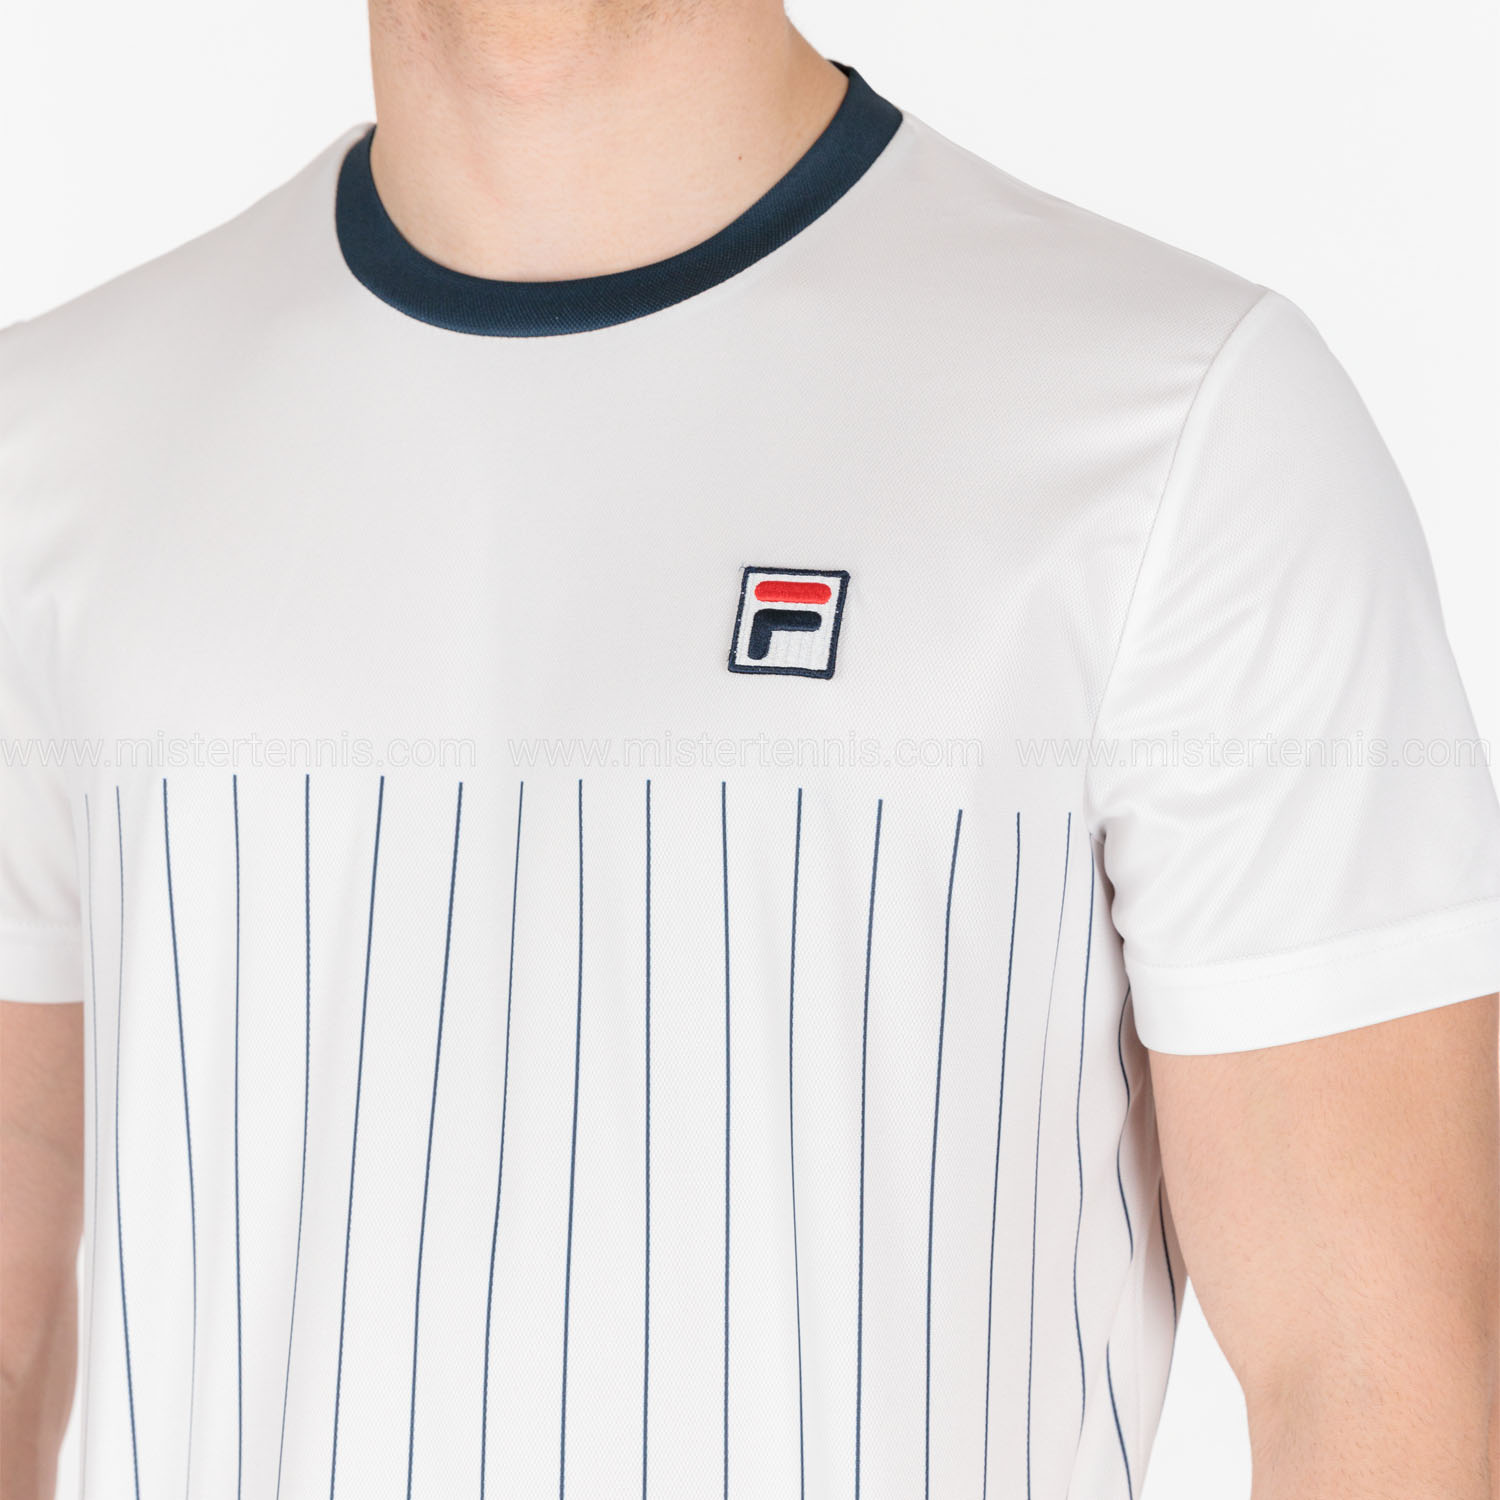 Fila Mika Men's Tennis T-Shirt - White/Peacoat Blue Stripes